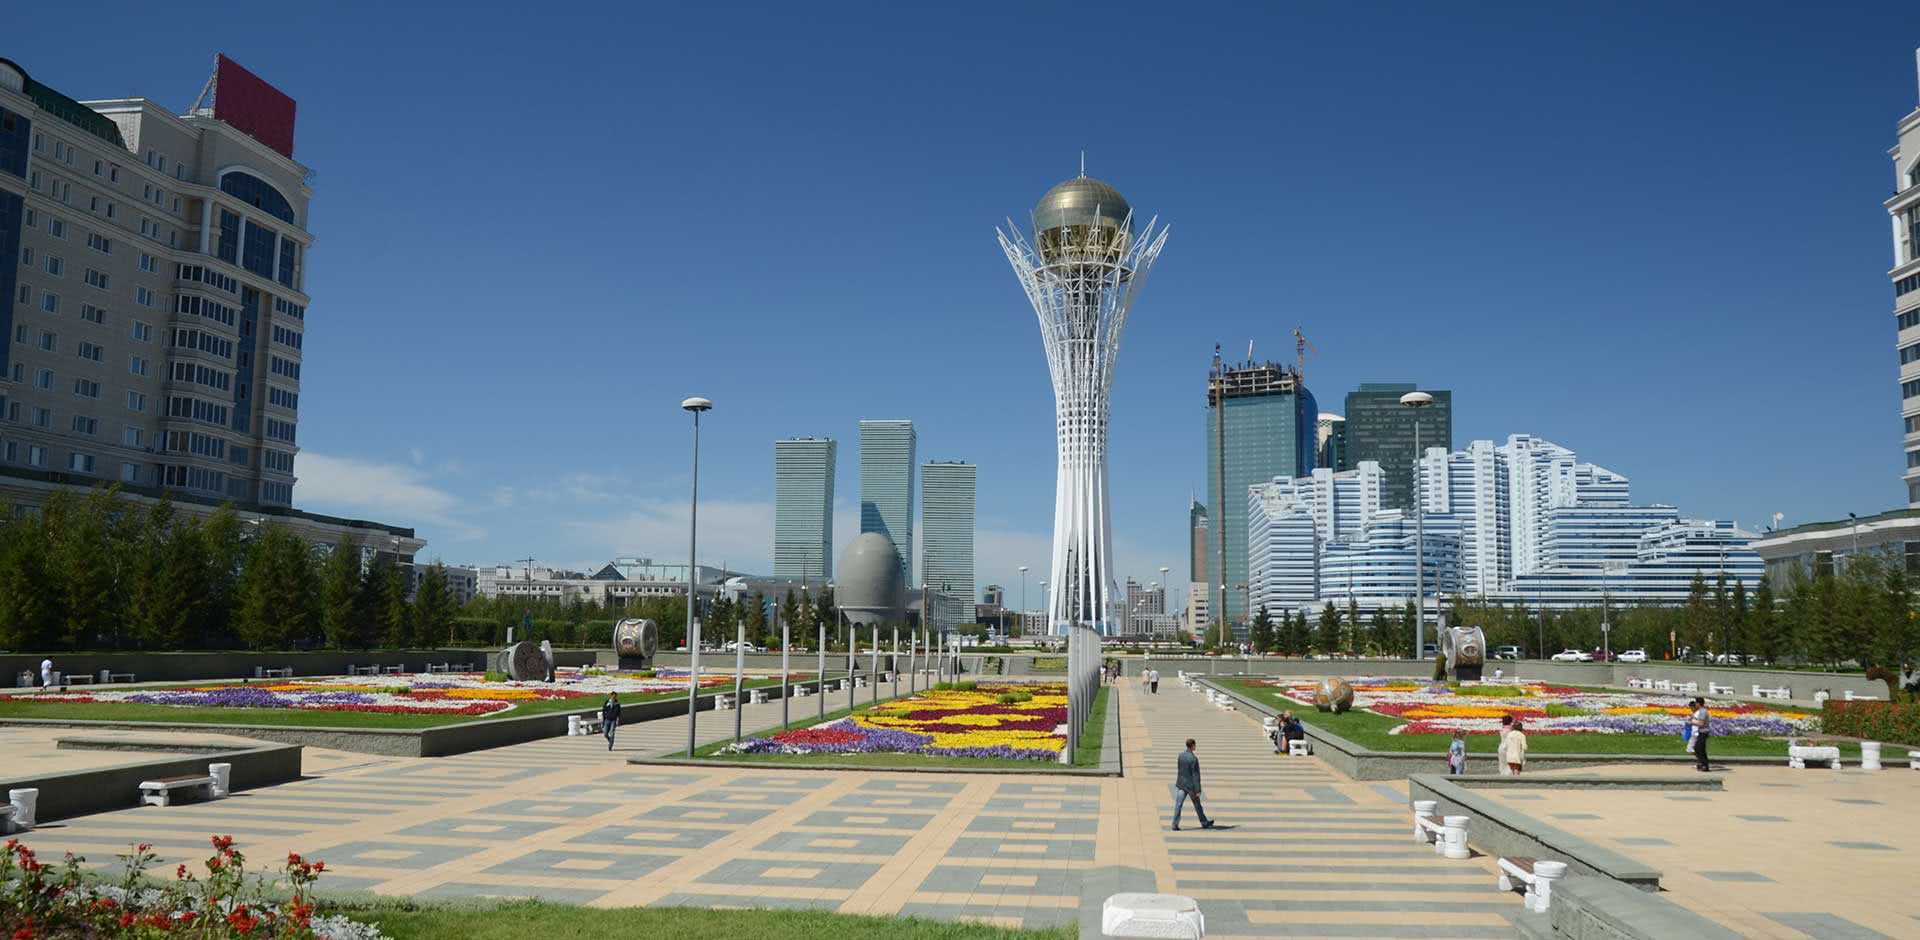 Kazakhstan Rising: Modern Architecture Taking Shape